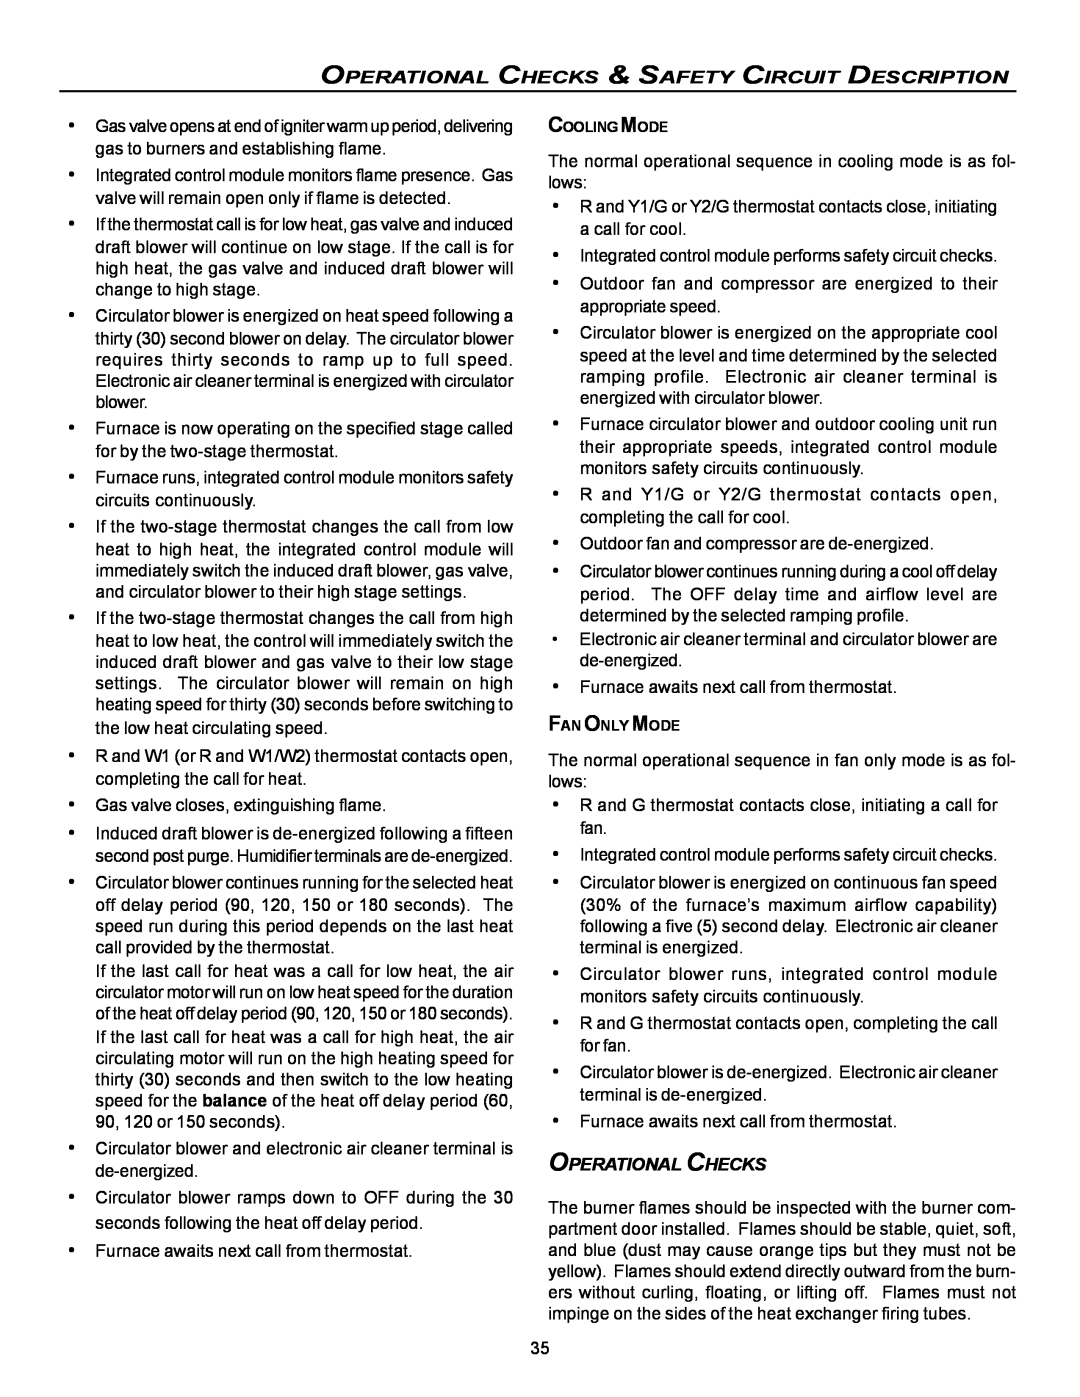 Goodman Mfg VC8 instruction manual Operational Checks & Safety Circuit Description 